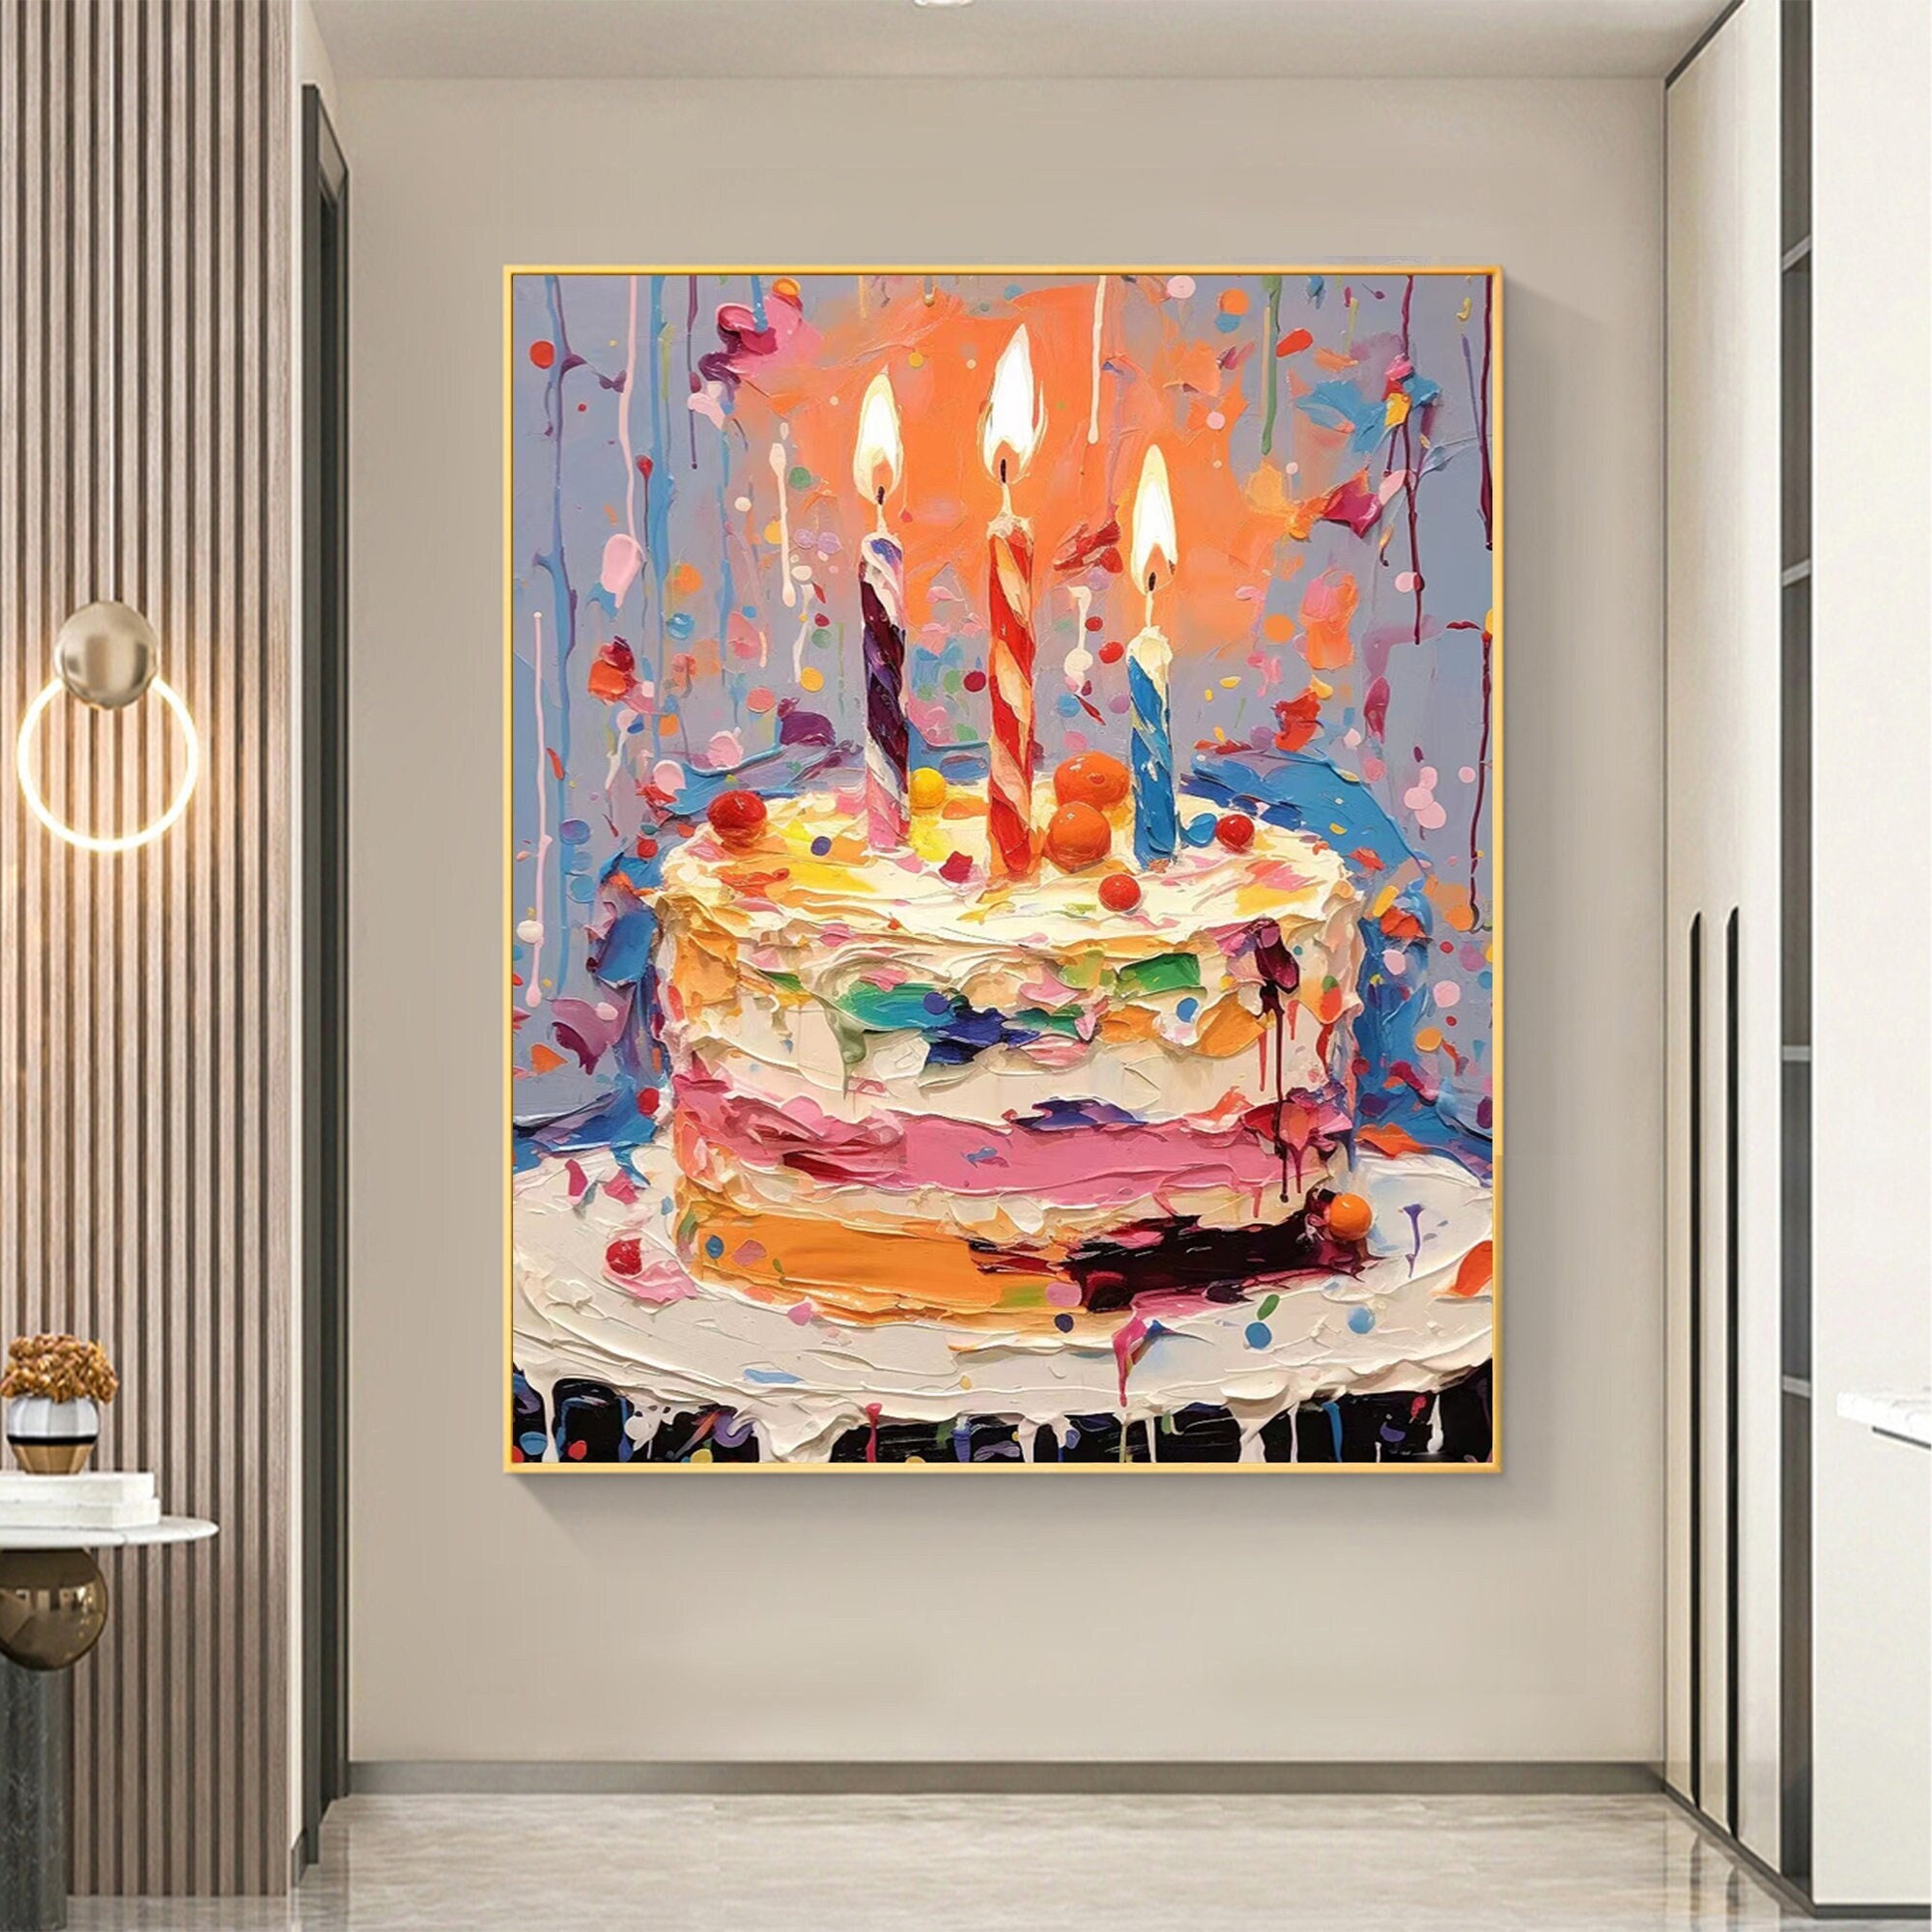 Art Paint Birthday Party Ideas - Art Birthday Party - Kennedy's